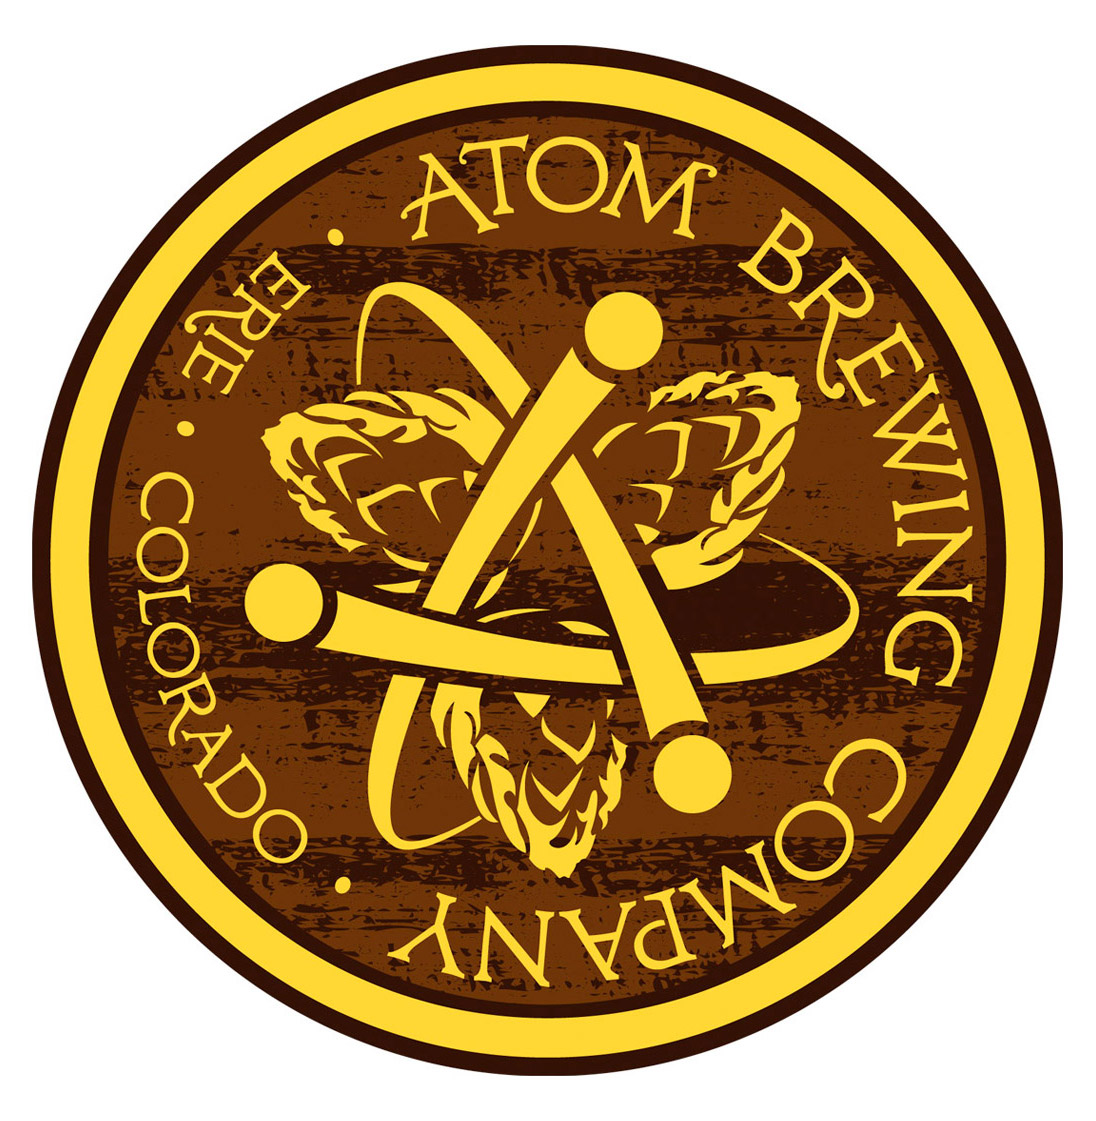 Atom-Brewing-Company-Branding-1920px-mobile